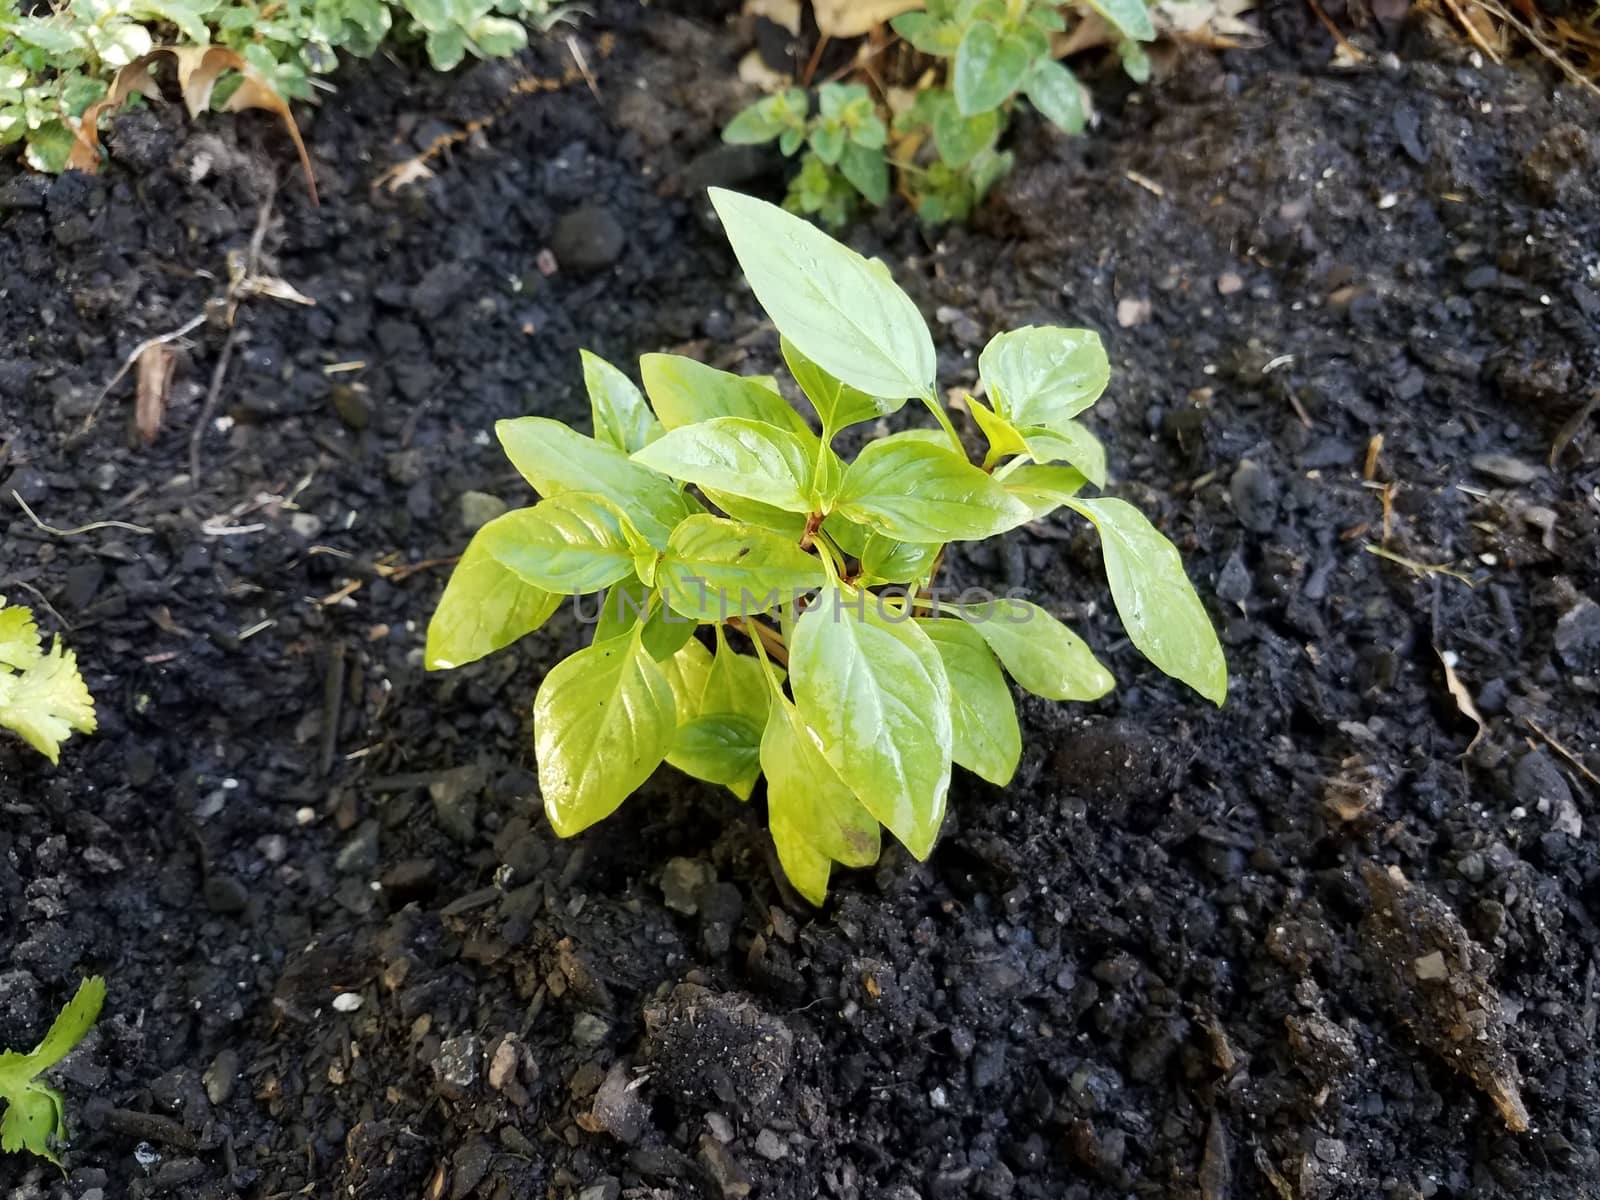 green leaves on basil plant in dirt or soil by stockphotofan1